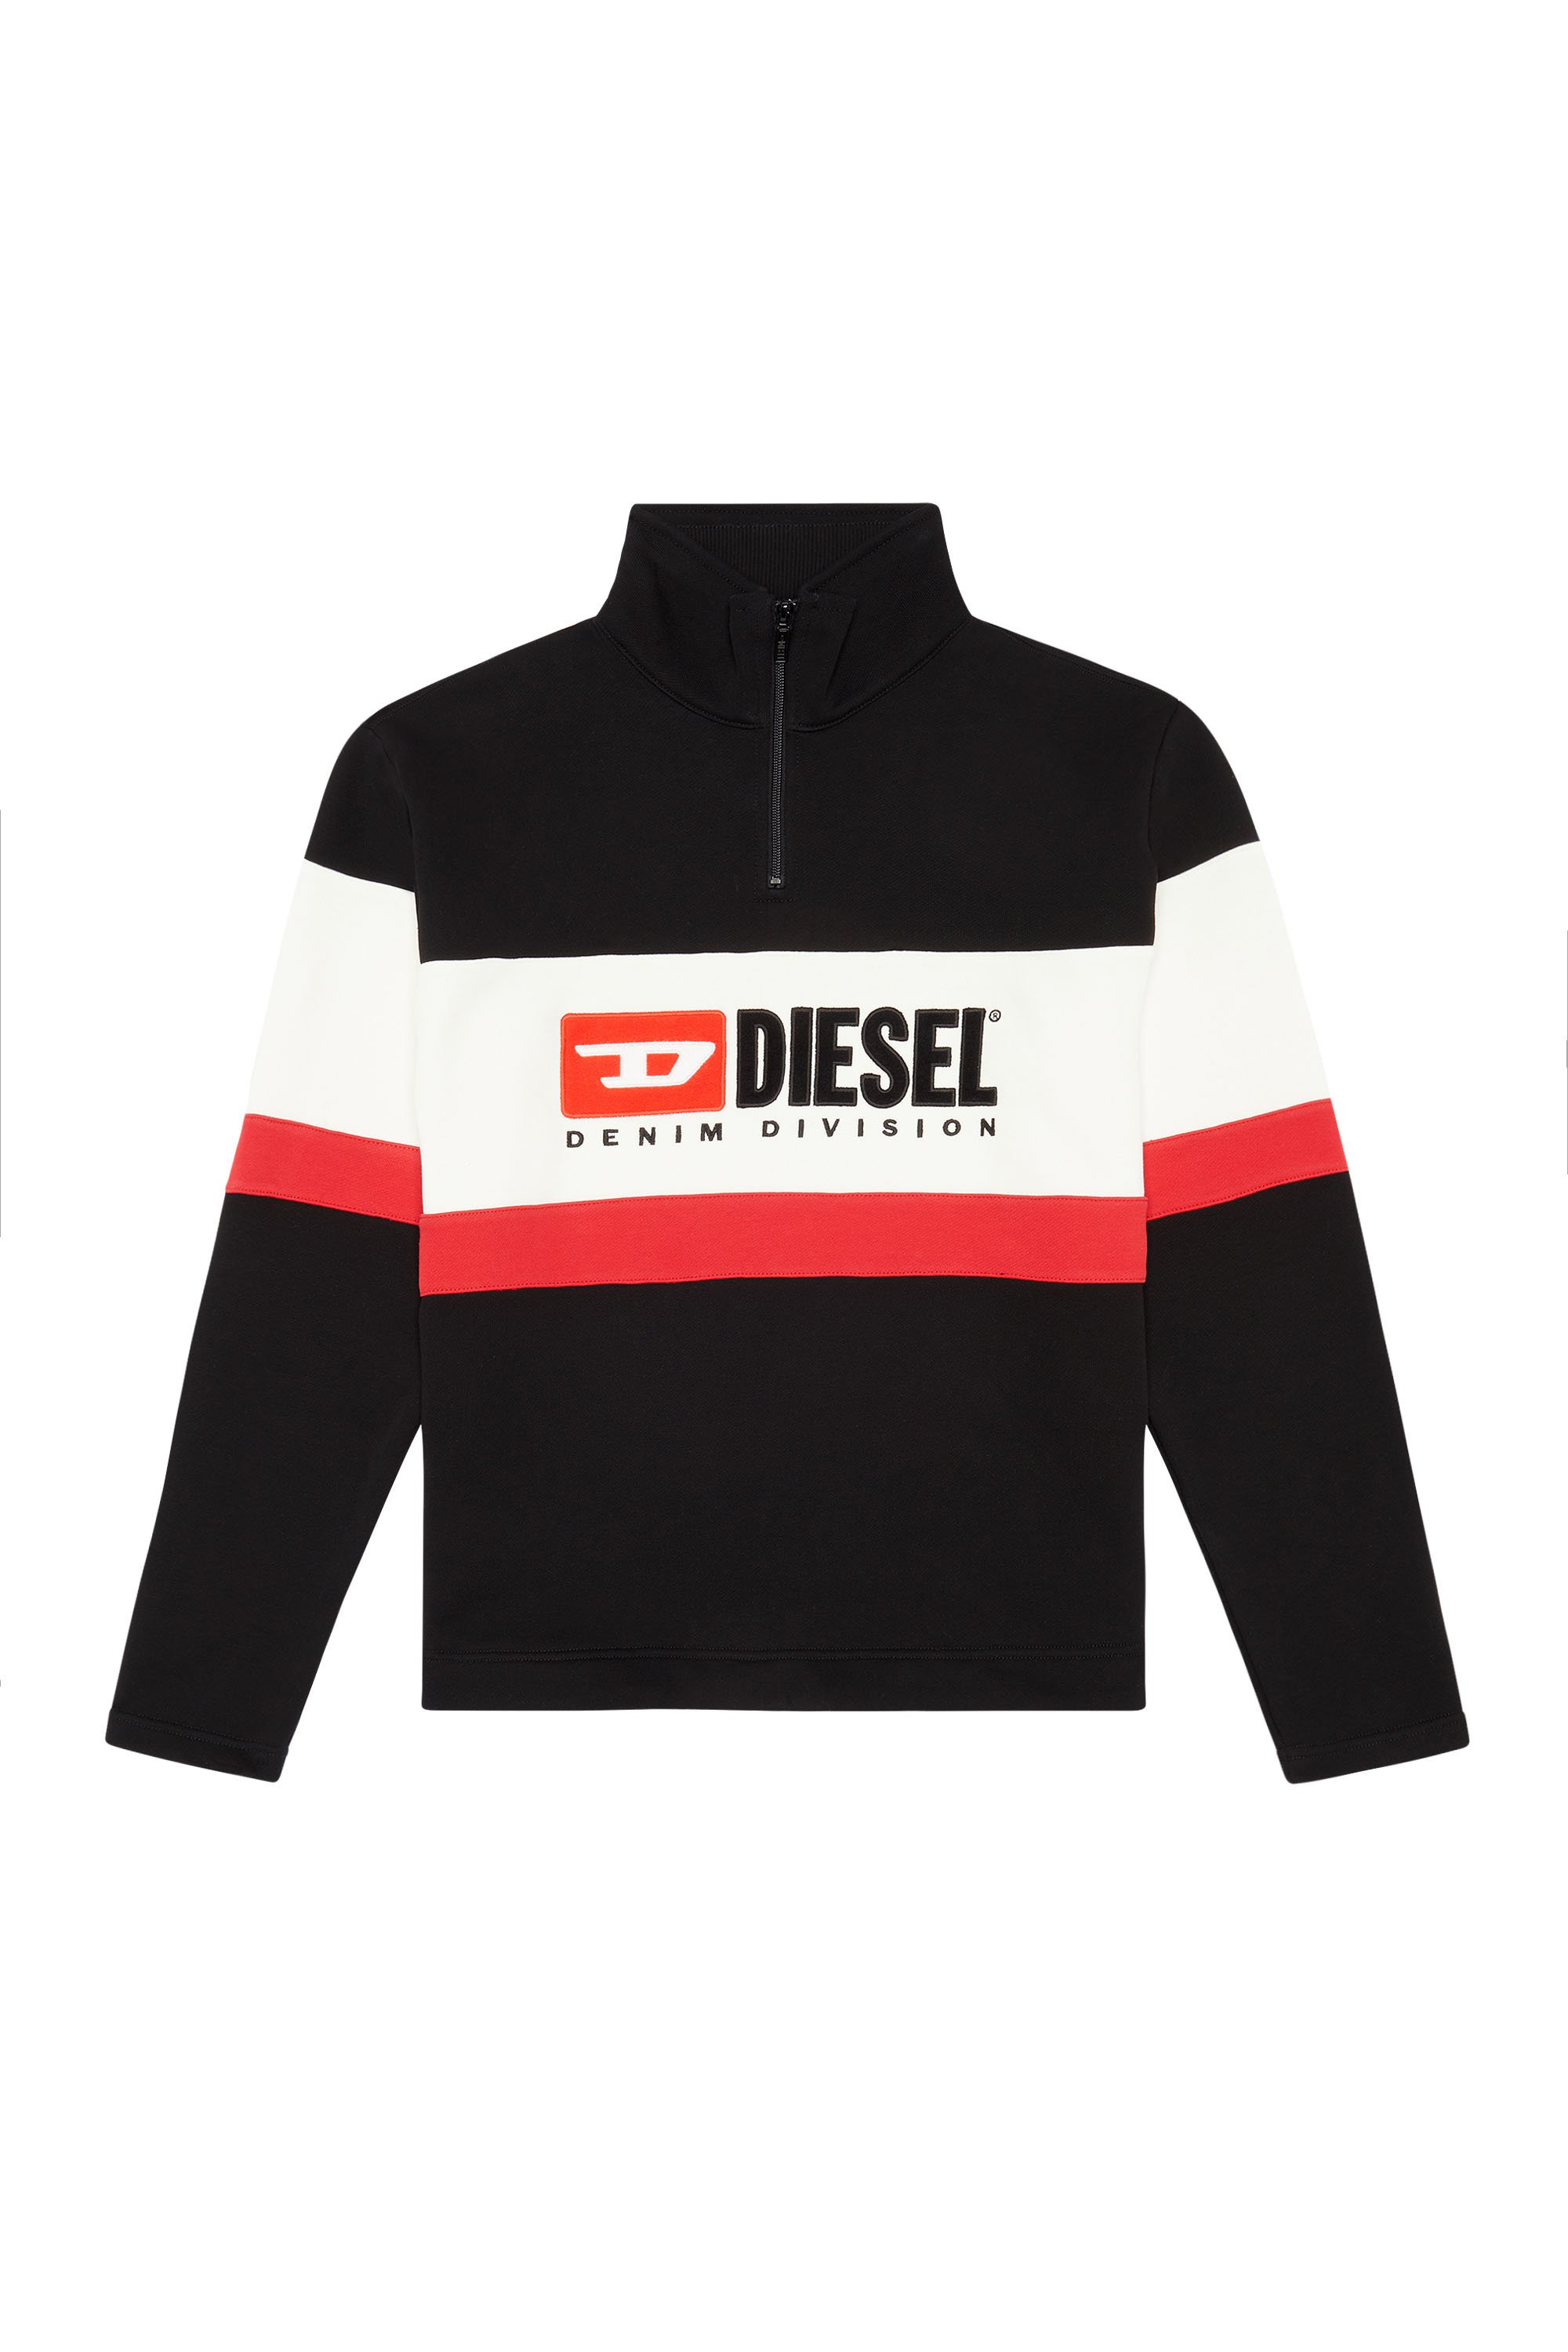 Diesel - S-SAINT-DIVISION, Black - Image 1